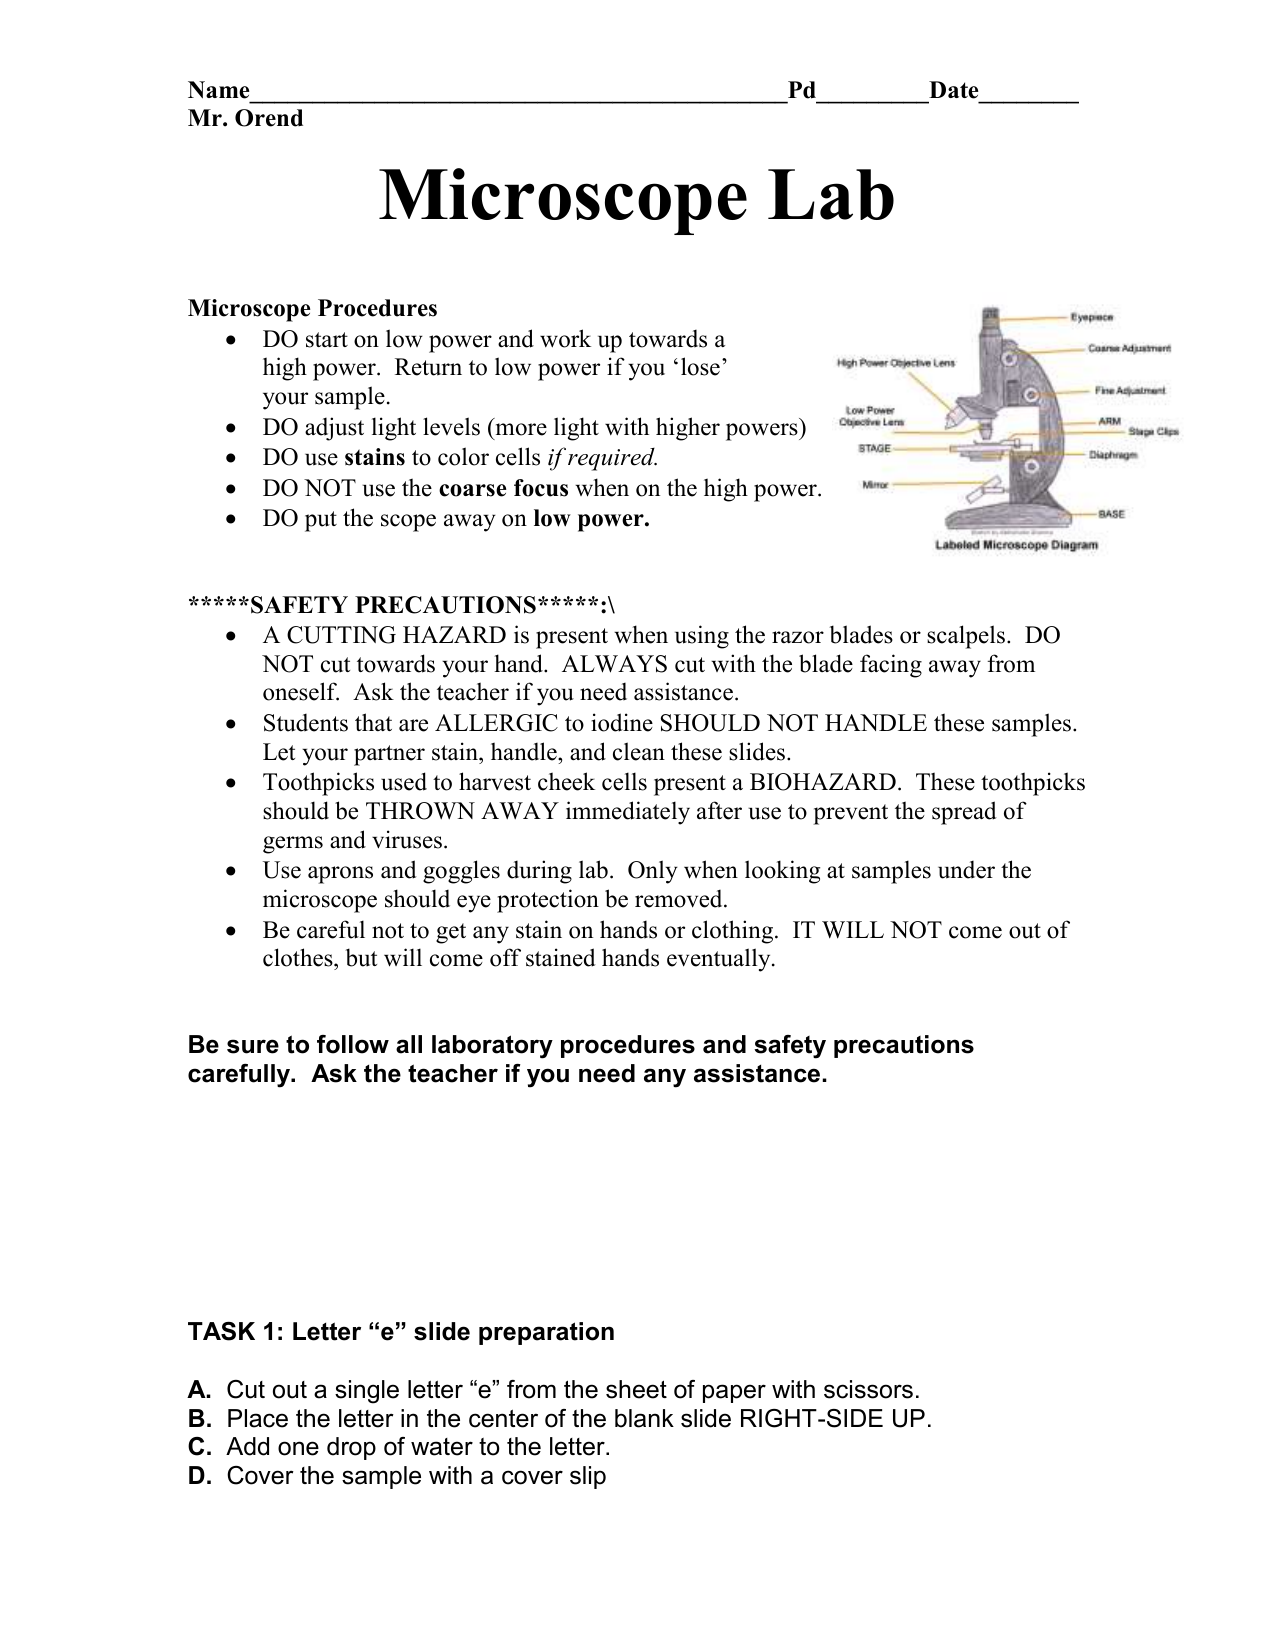 letter-e-microscope-lab-answers-micropedia